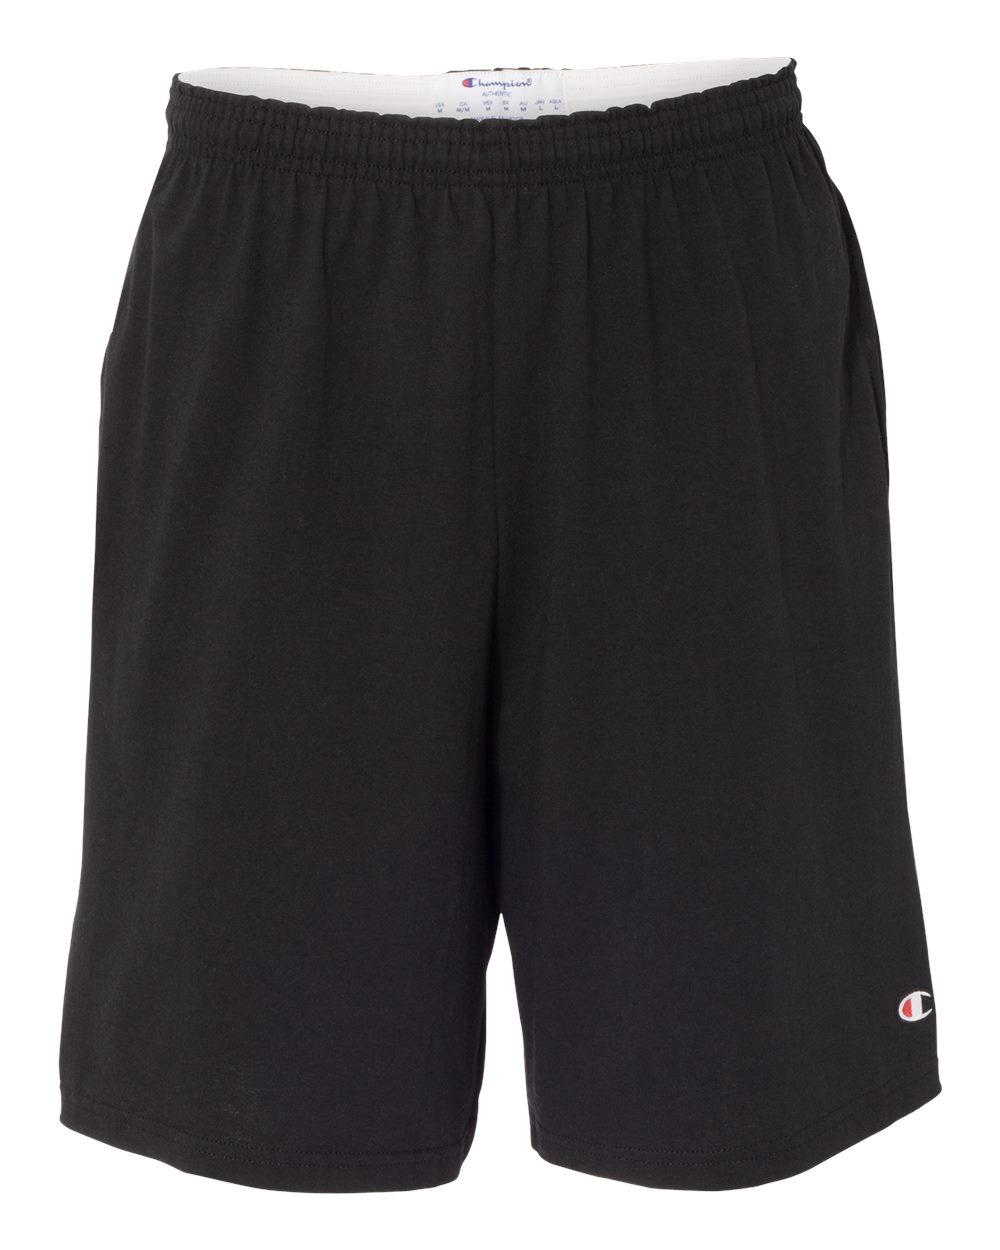 Men's Jersey Shorts w/ Pockets